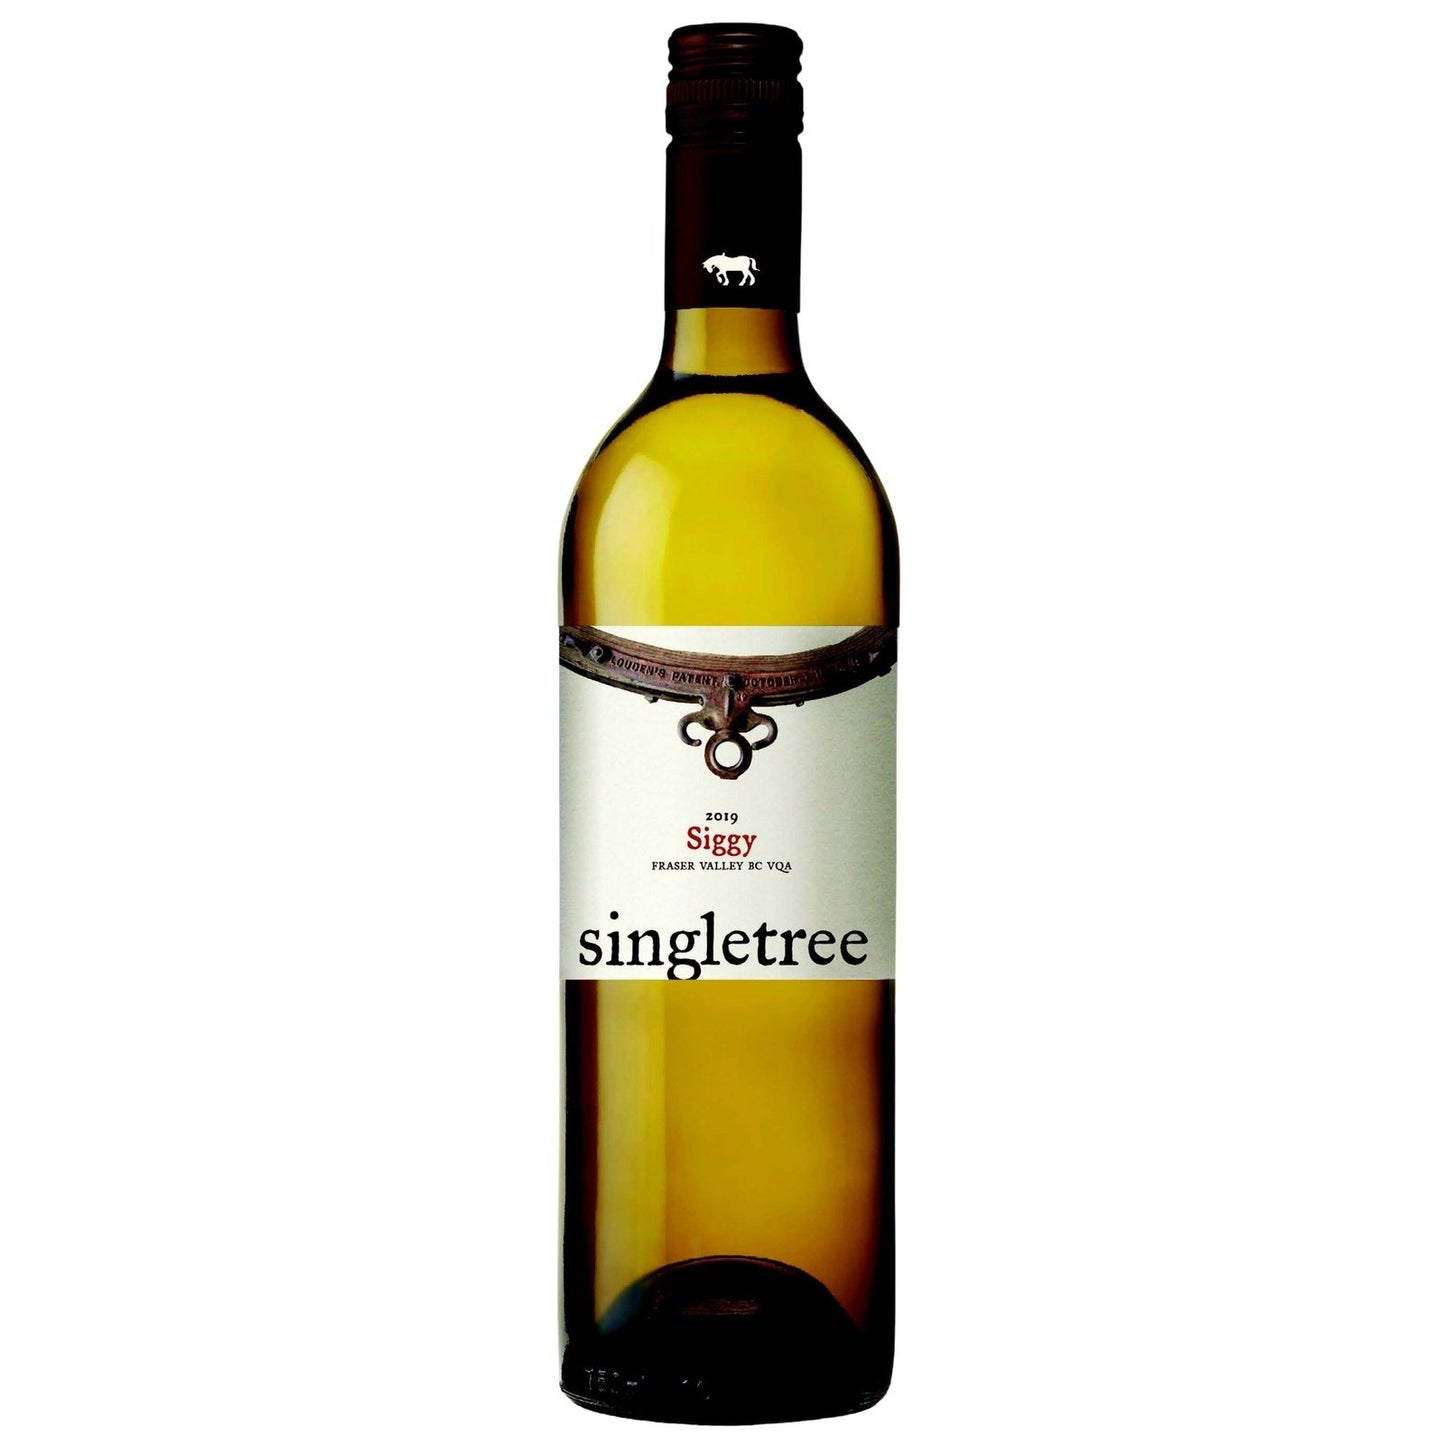 2019 Singletree “Siggy” - Carl's Wine Club